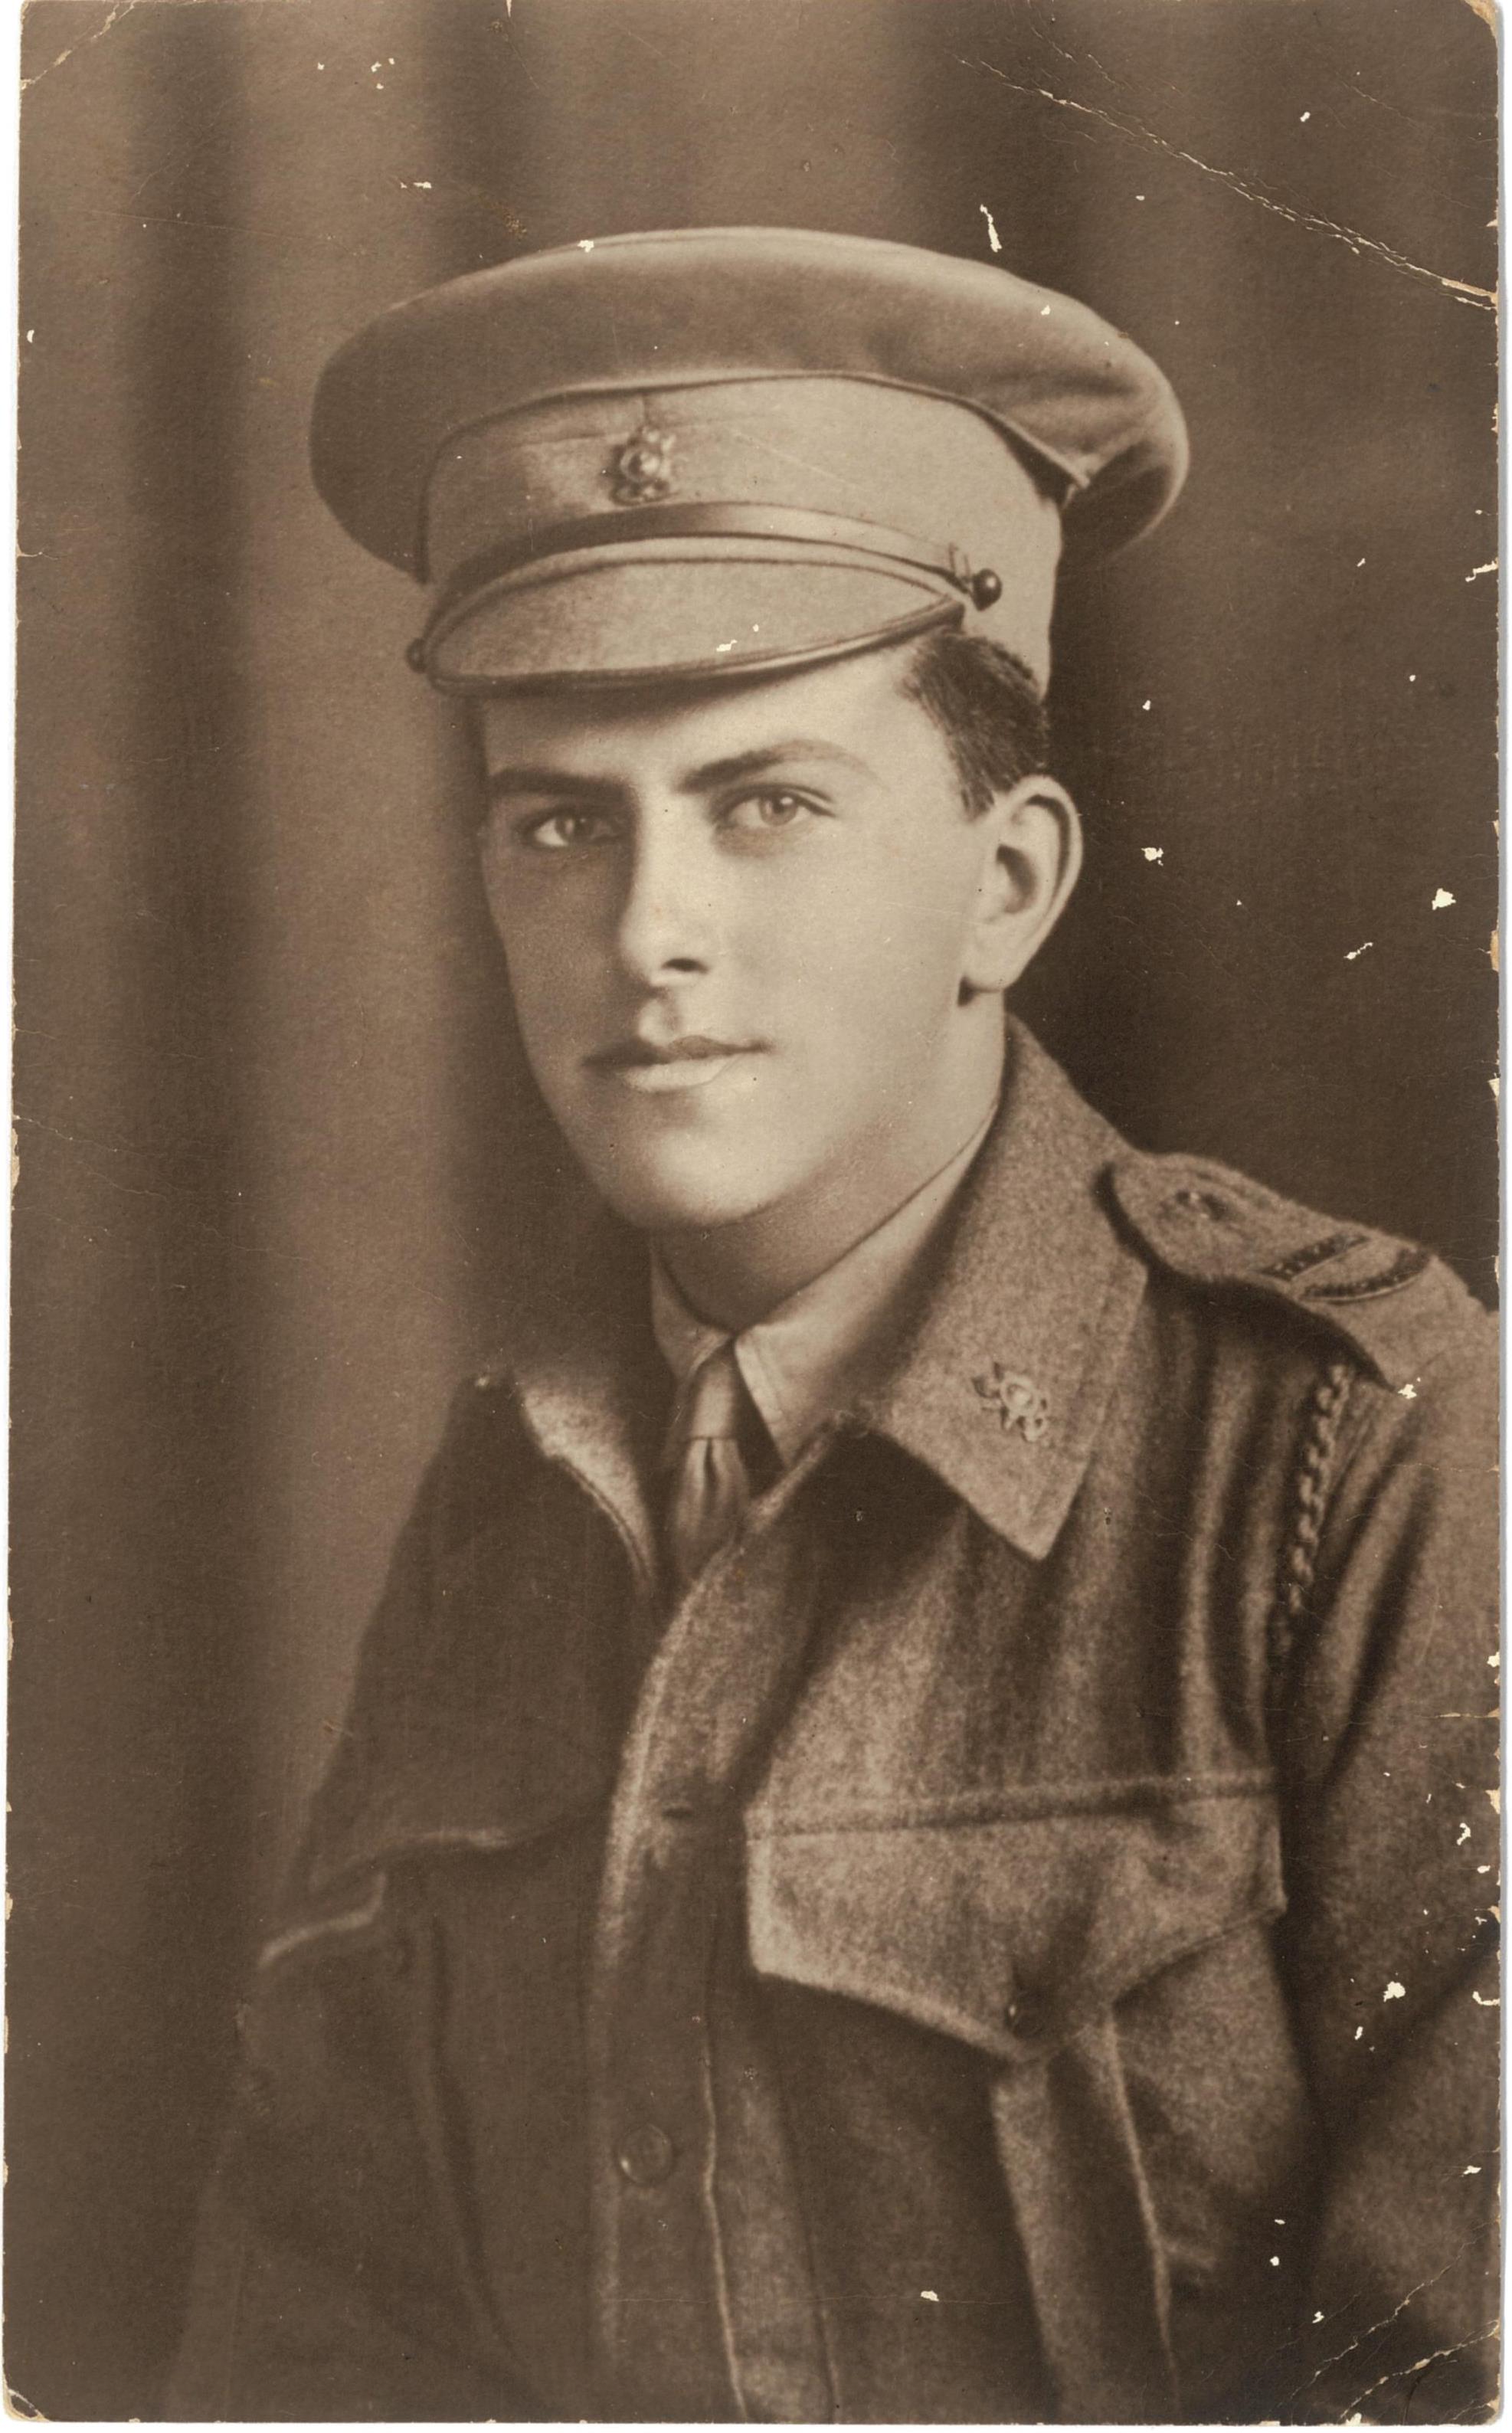 Studio portrait of Robert James Macgregor Barnet in AIF uniform, 1916 / C. & B. Macfarlane, photographers 